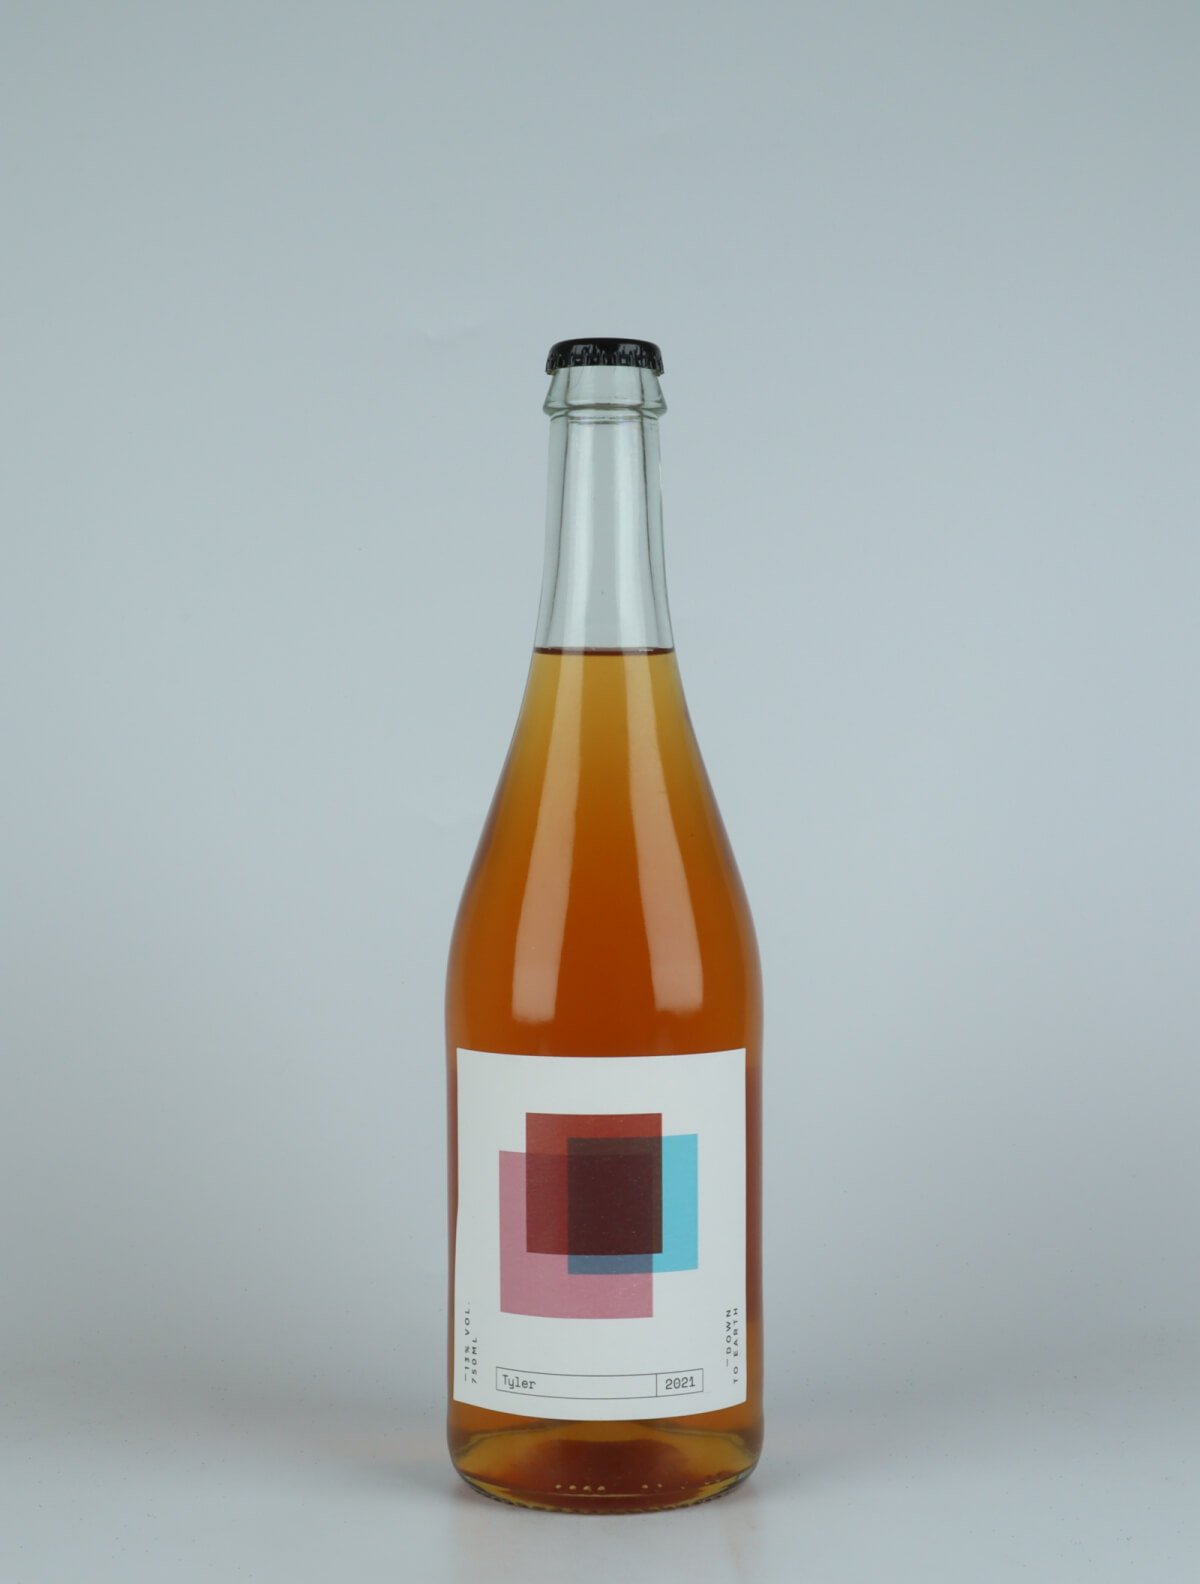 A bottle 2021 Tyler Orange wine from do.t.e Vini, Tuscany in Italy